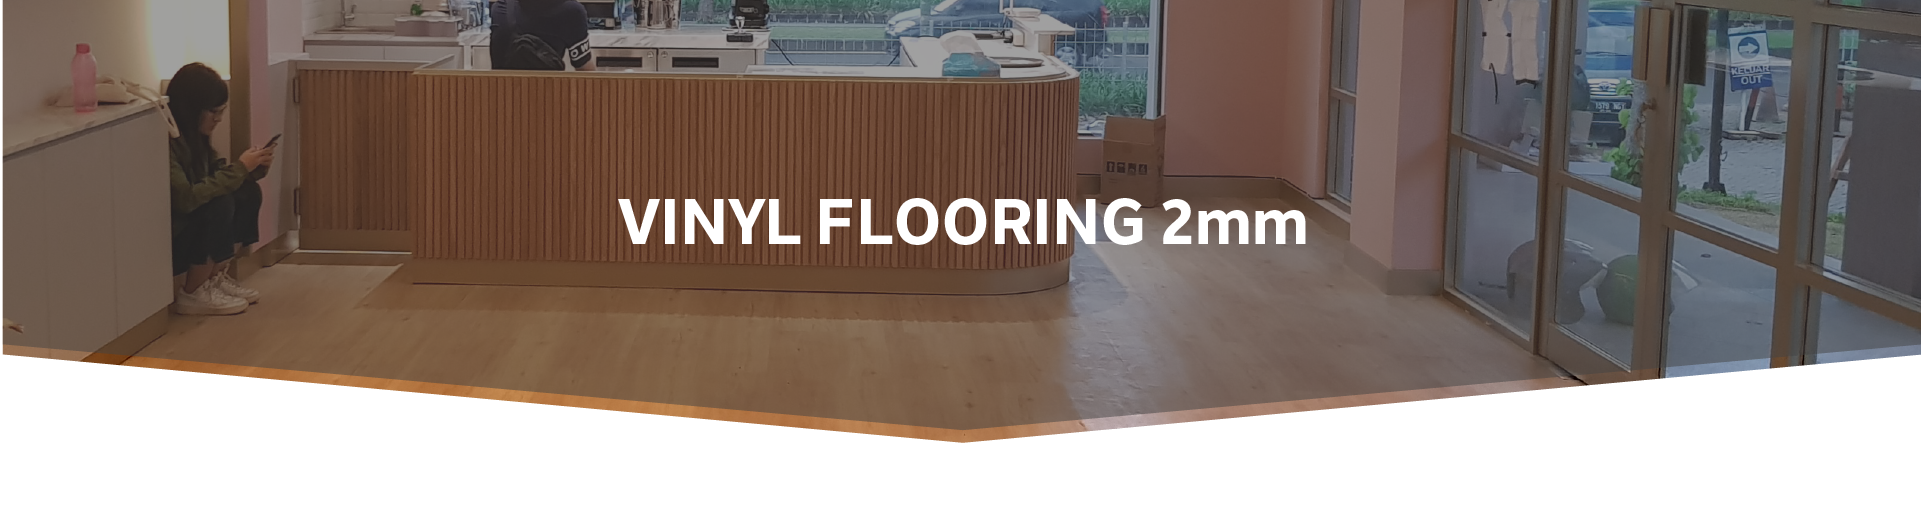 vinyl flooring 2mm by Halcyon Interior